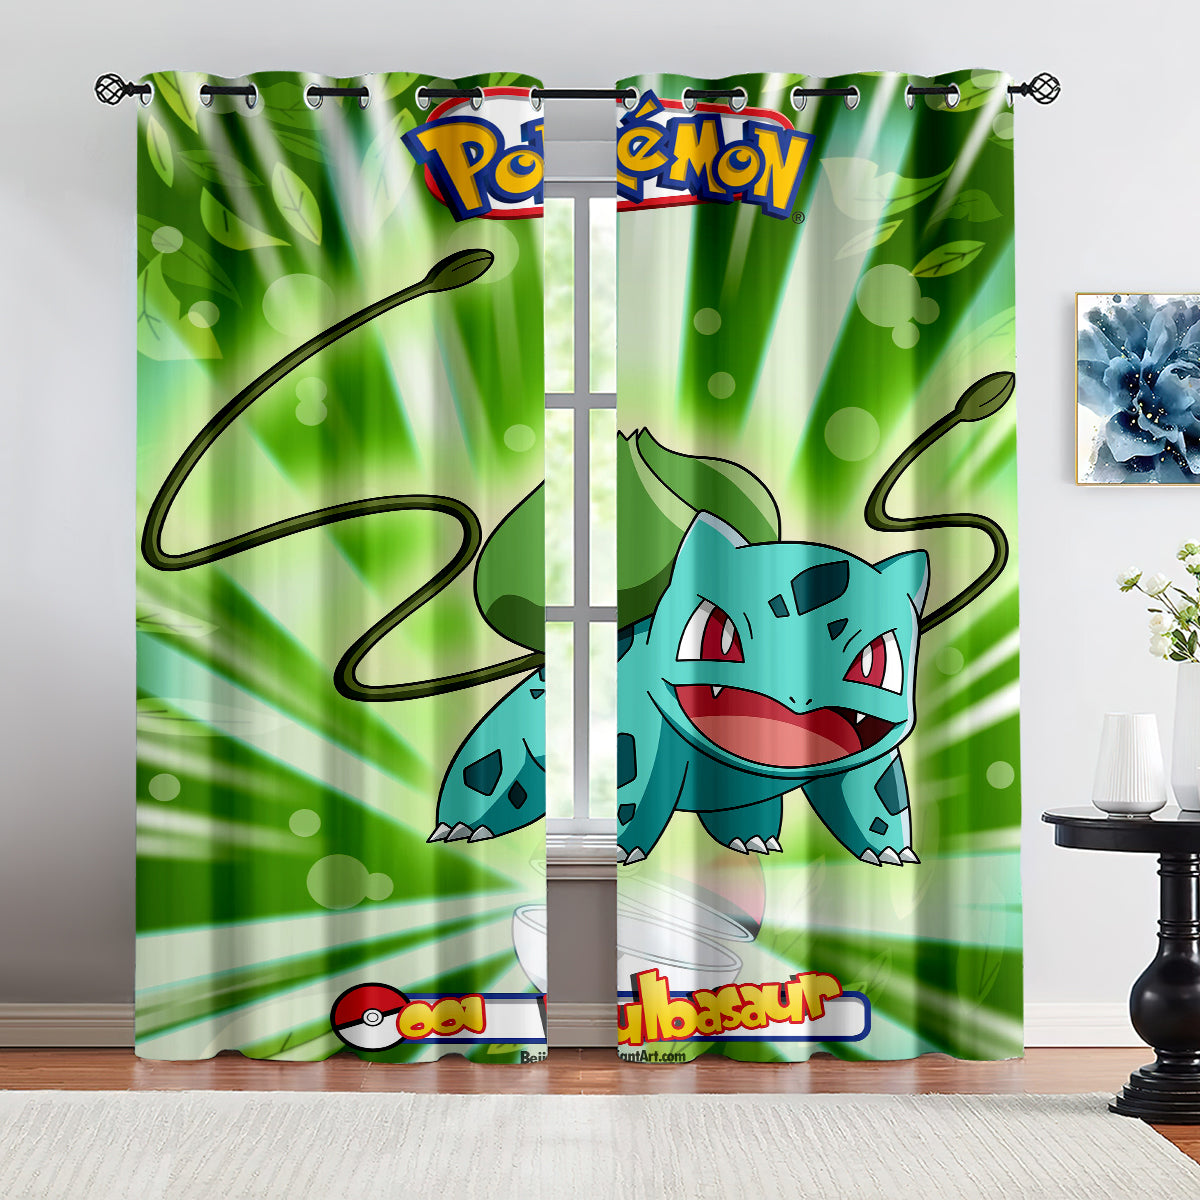 Pokemon Bulbasaur  Blackout Curtains Drapes for Window Treatment Set